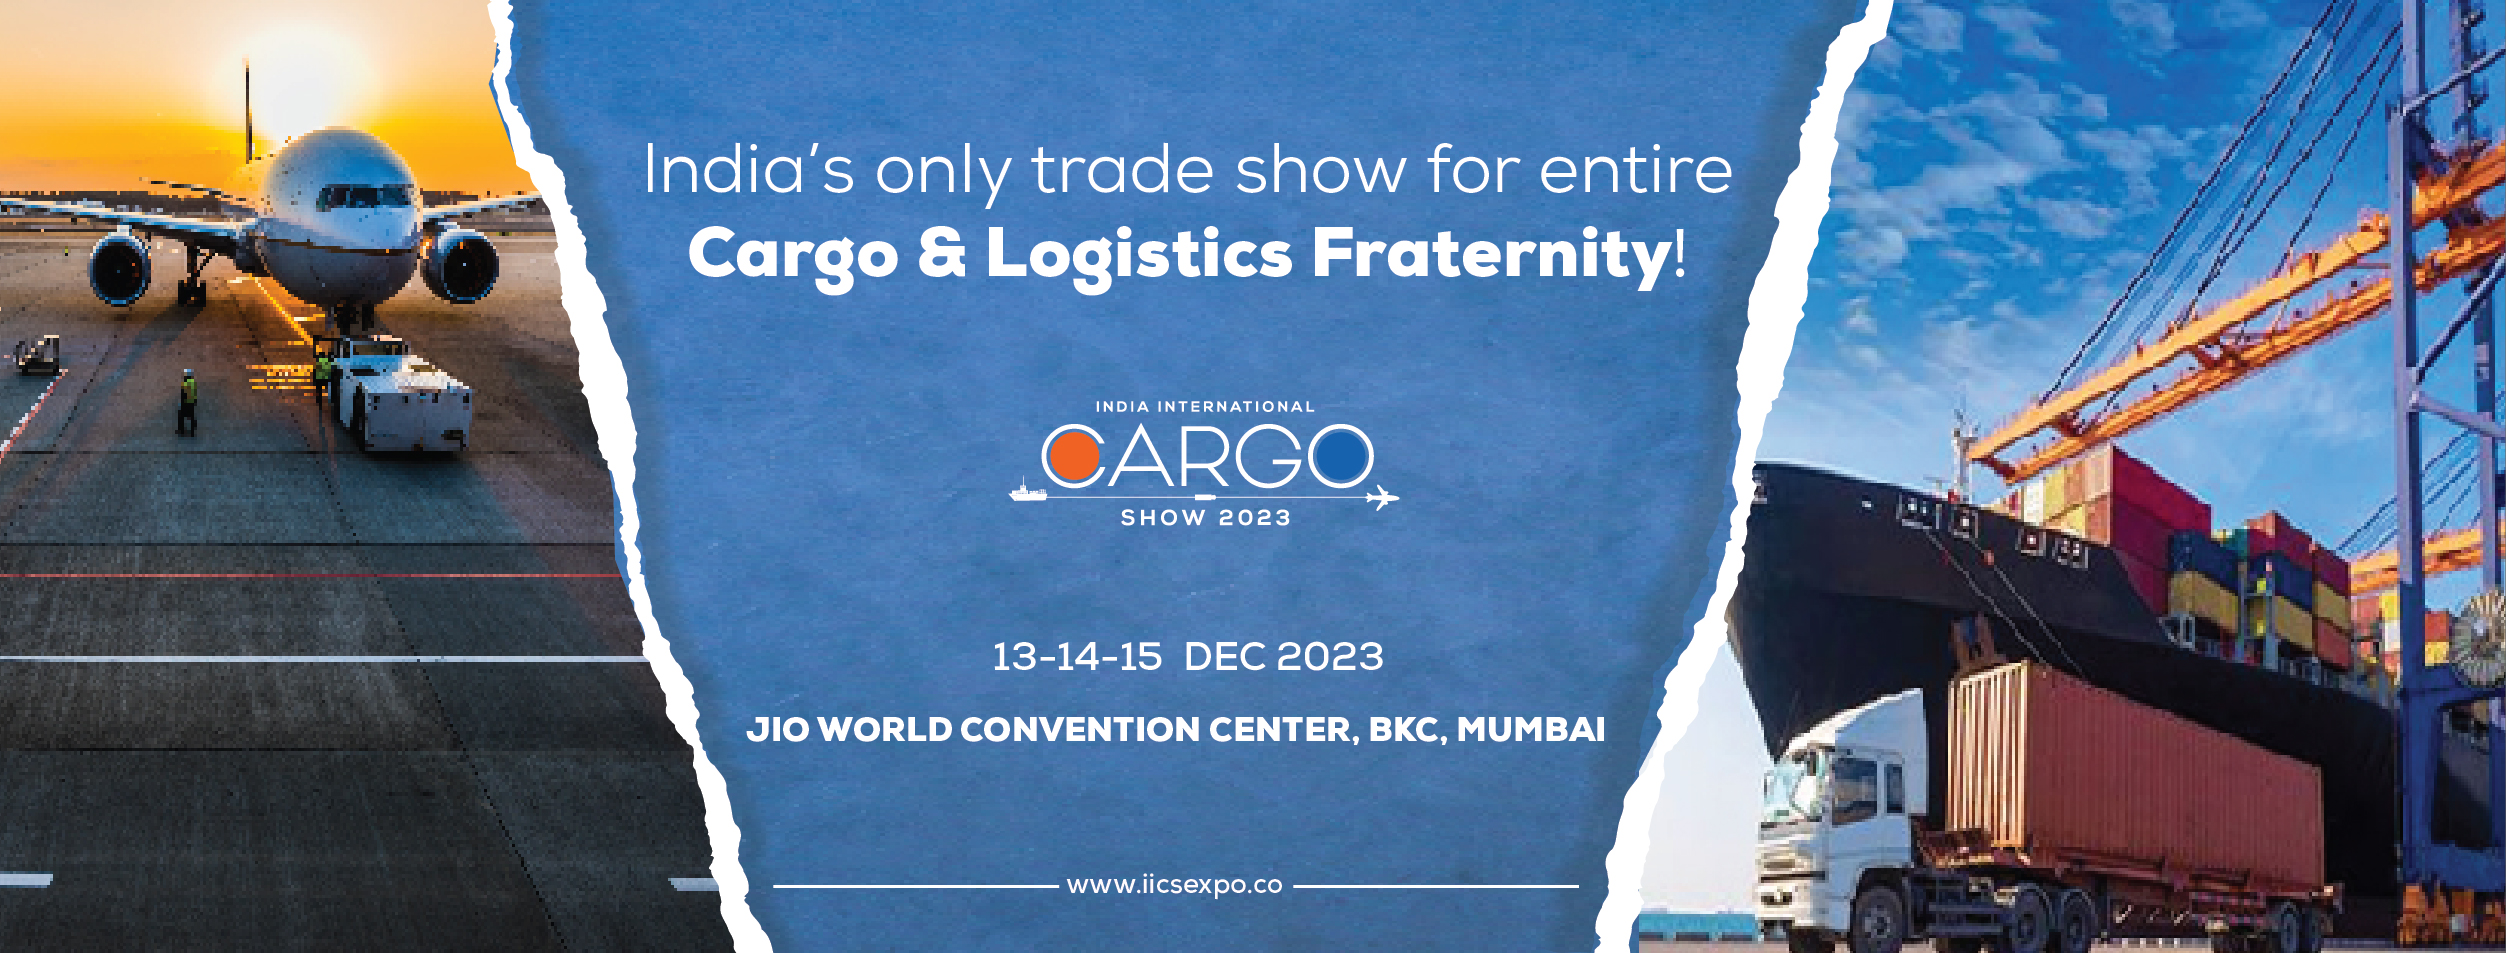 India-International- Cargo-Show-2023